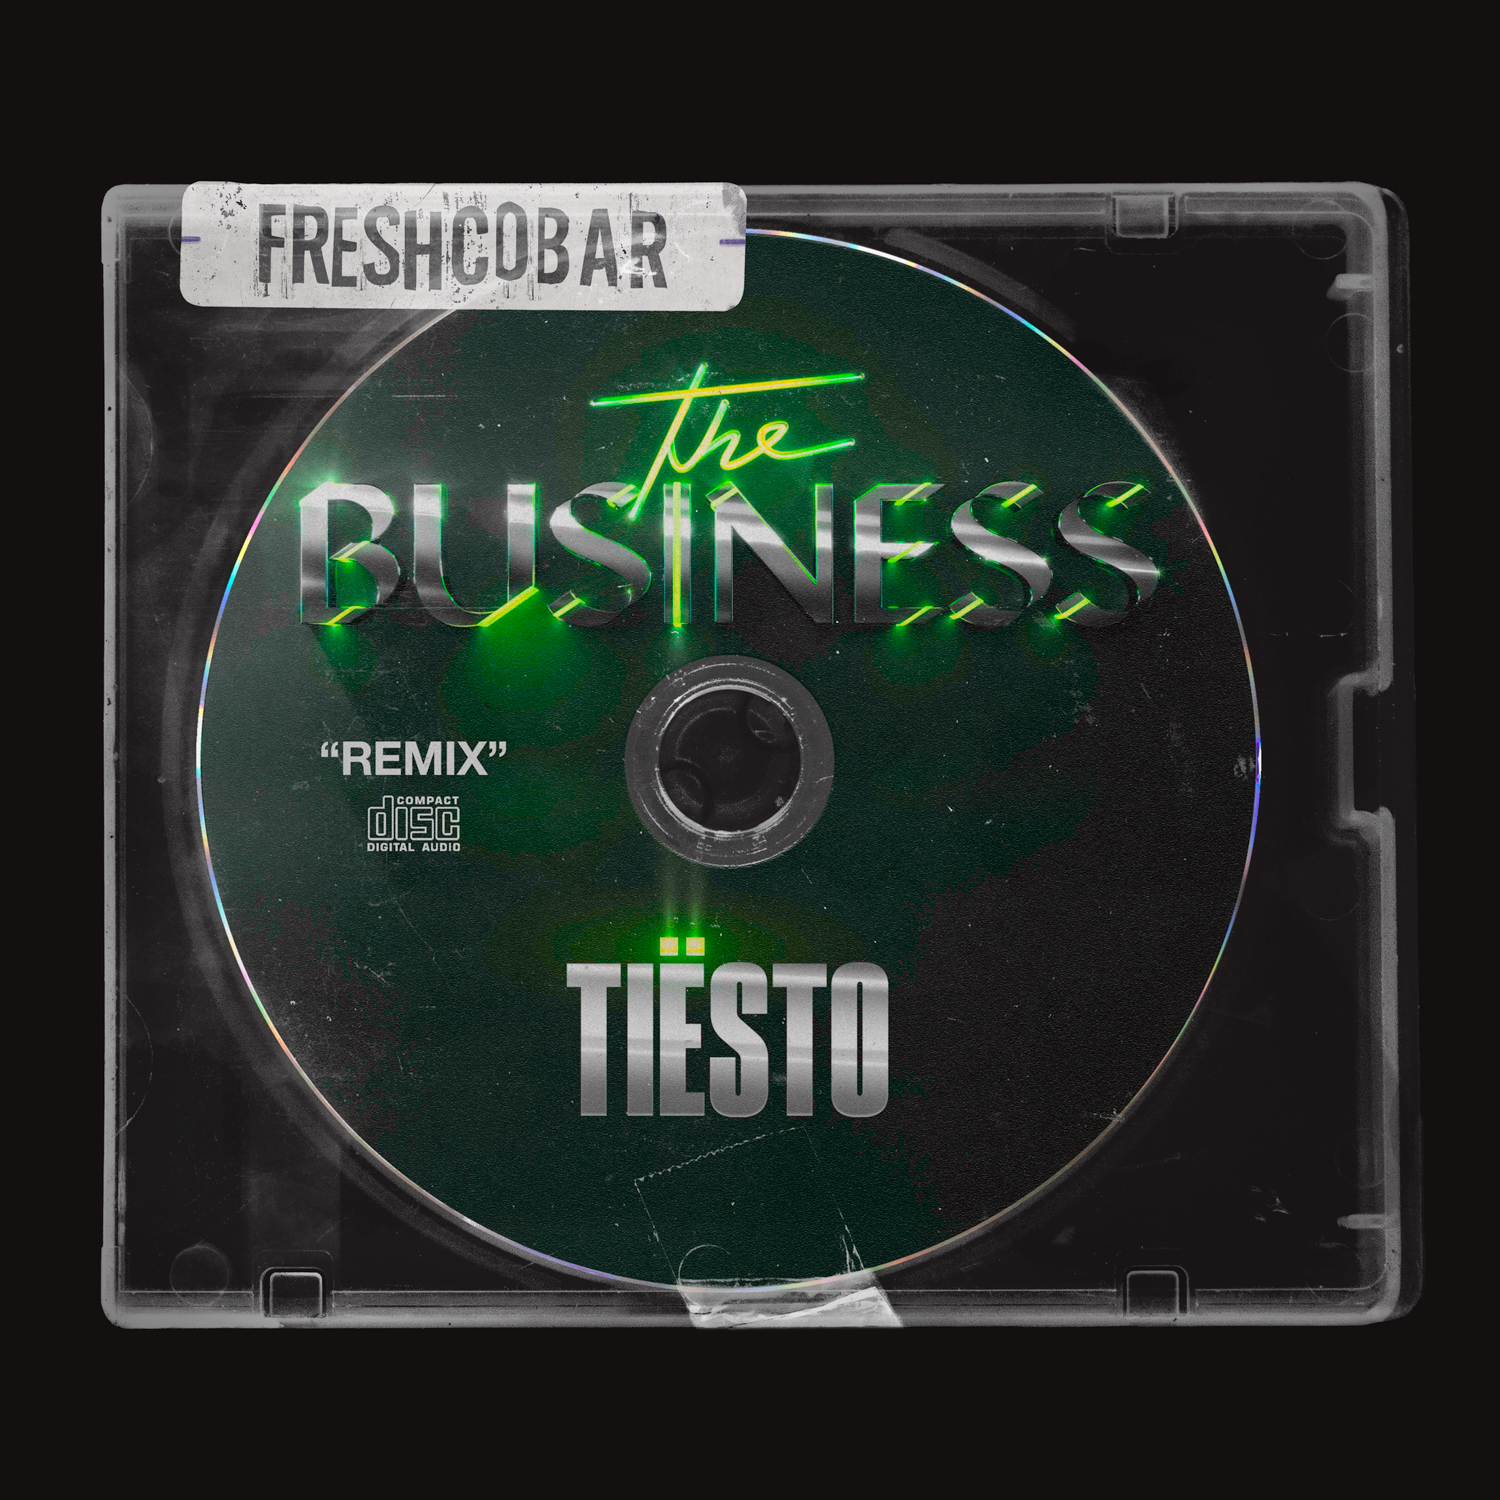 Tiesto - The Business (Freshcobar Remix)